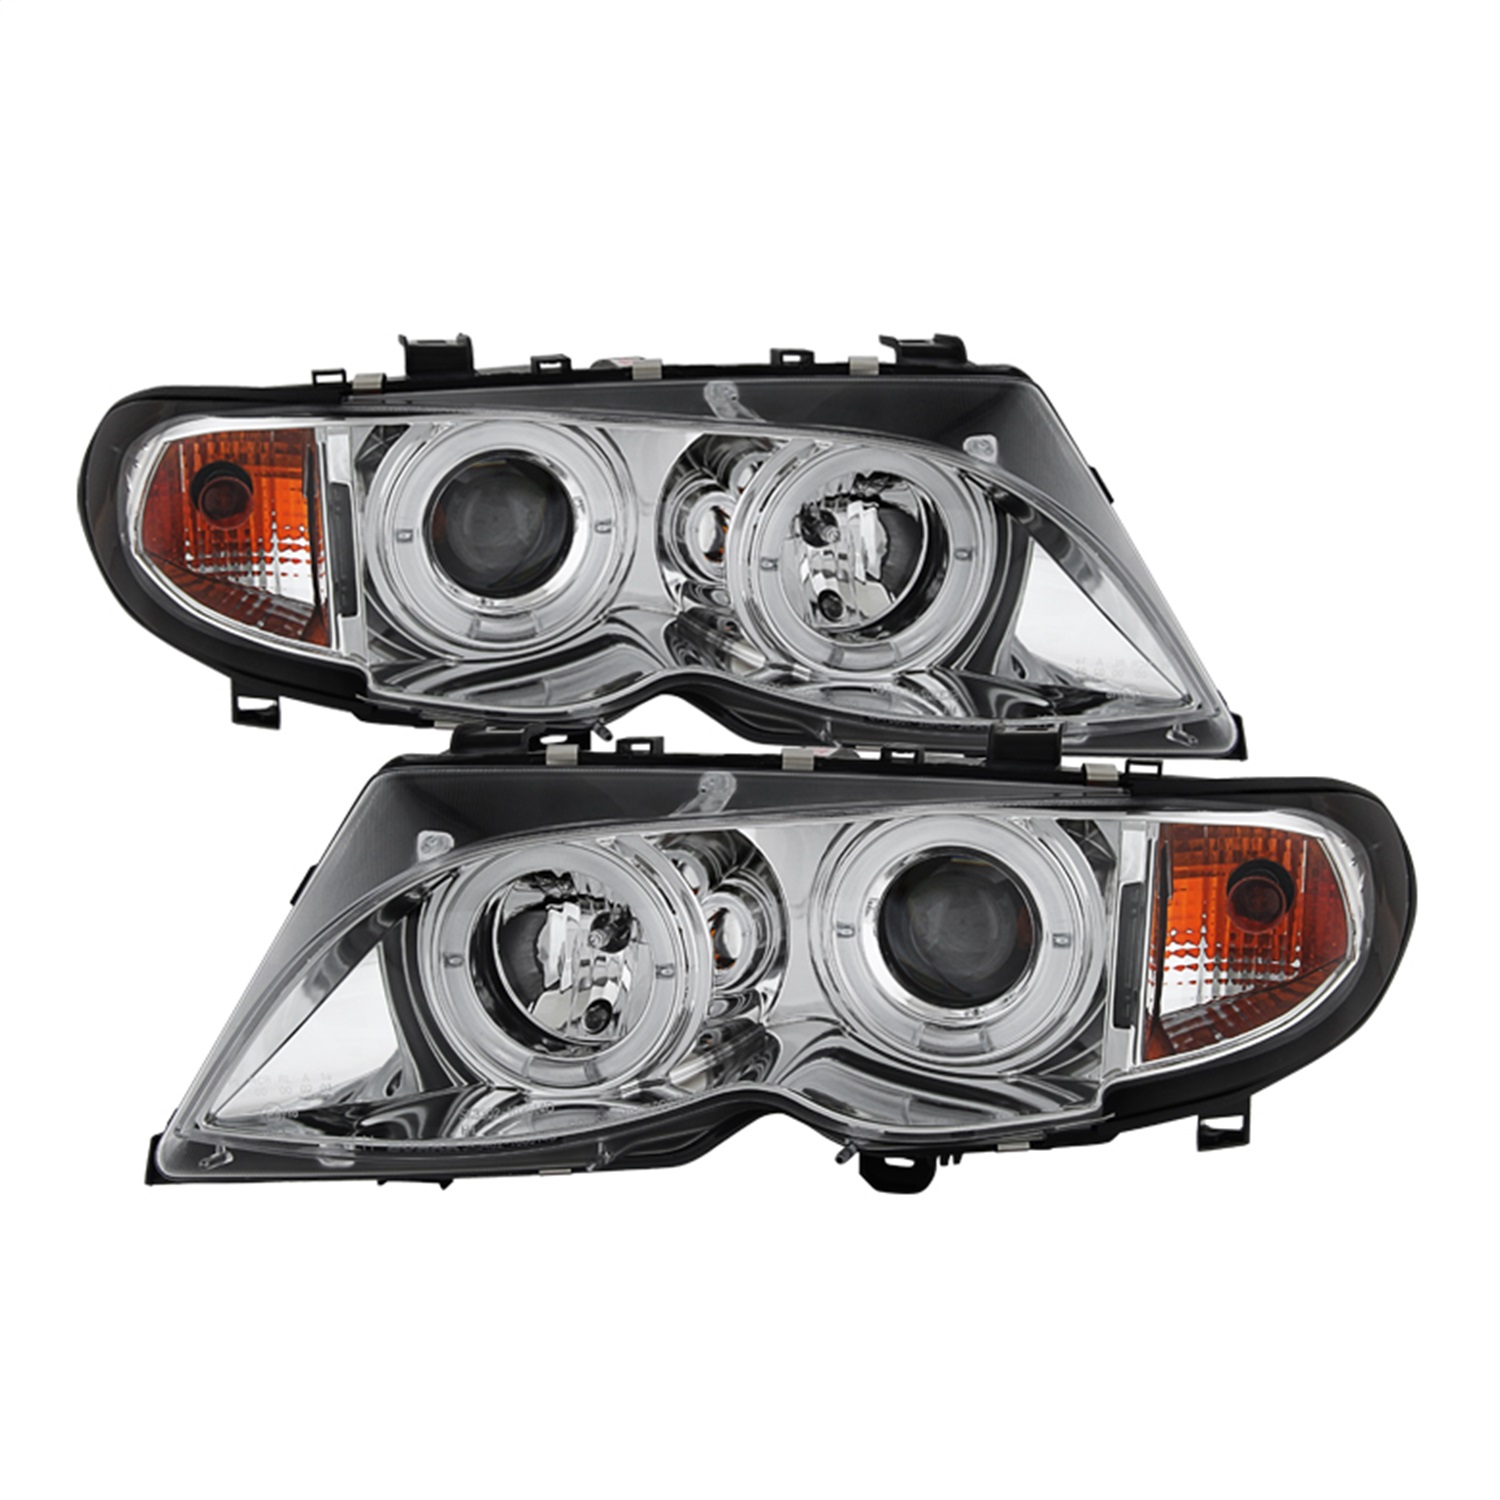 Spyder Auto 5042408 Halo Projector Headlights Fits 320i 325i 325xi 330i 330xi